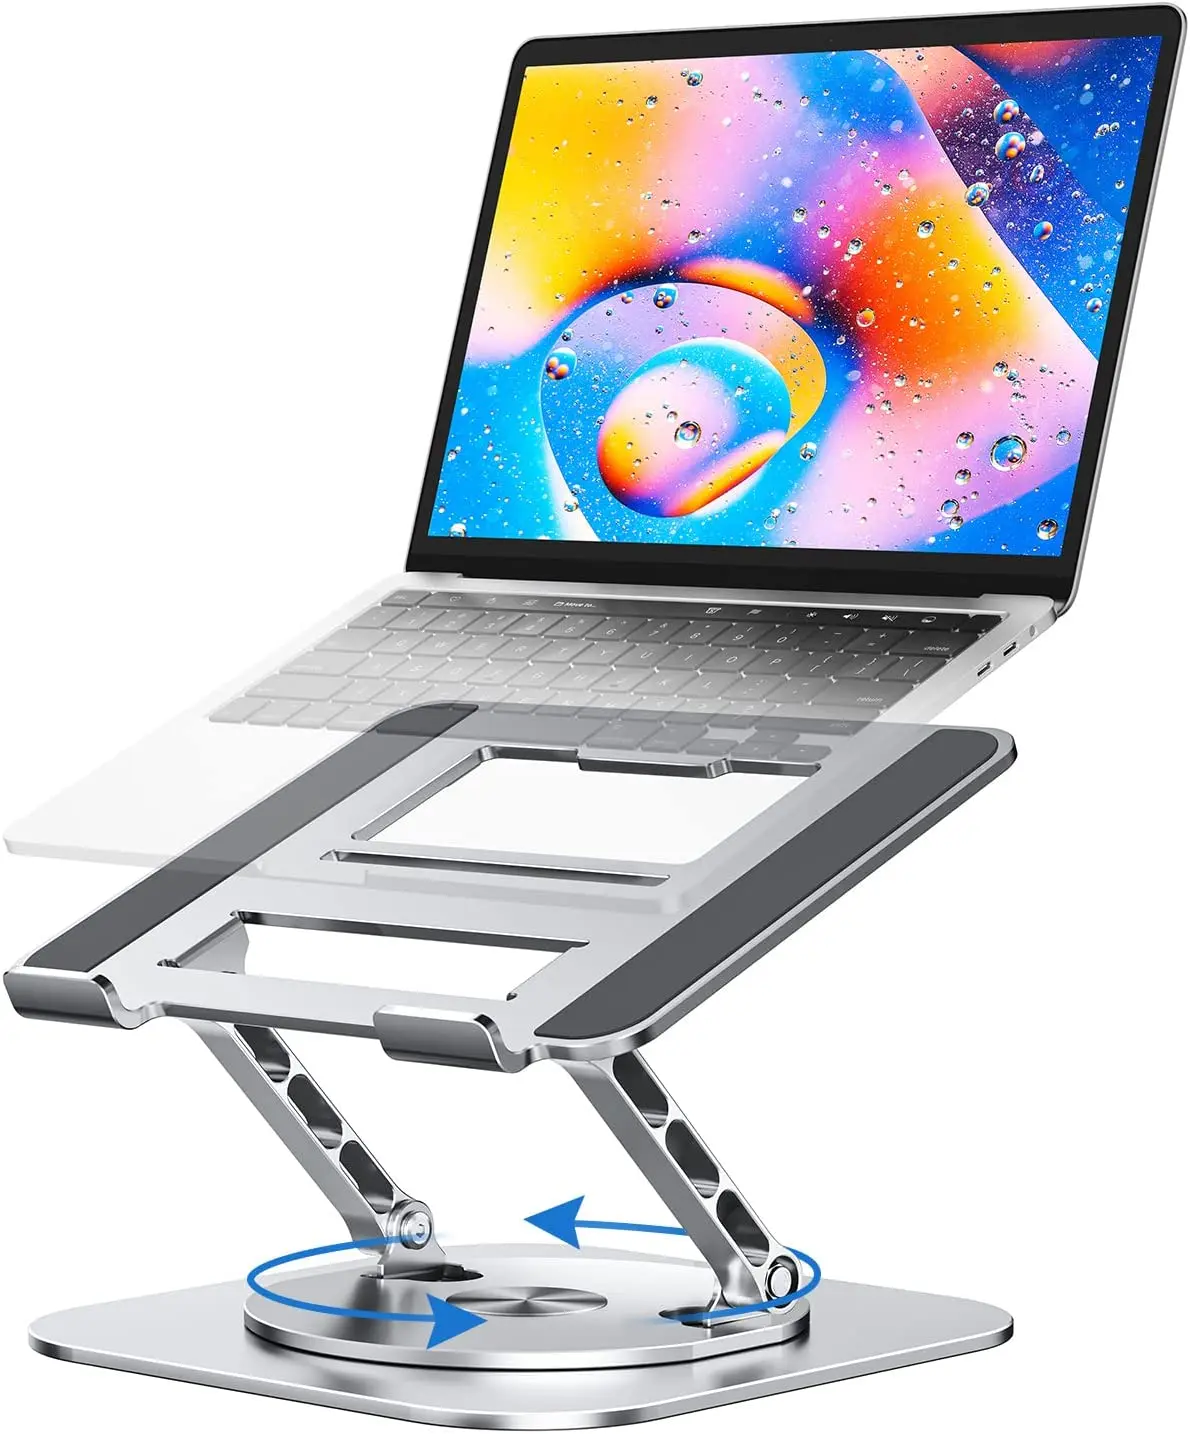 

Adjustable Laptop Stand for Desk, Ergonomic Laptop Riser with 360° Rotating Base, Foldable Notebook Computer Holder Stand Compat